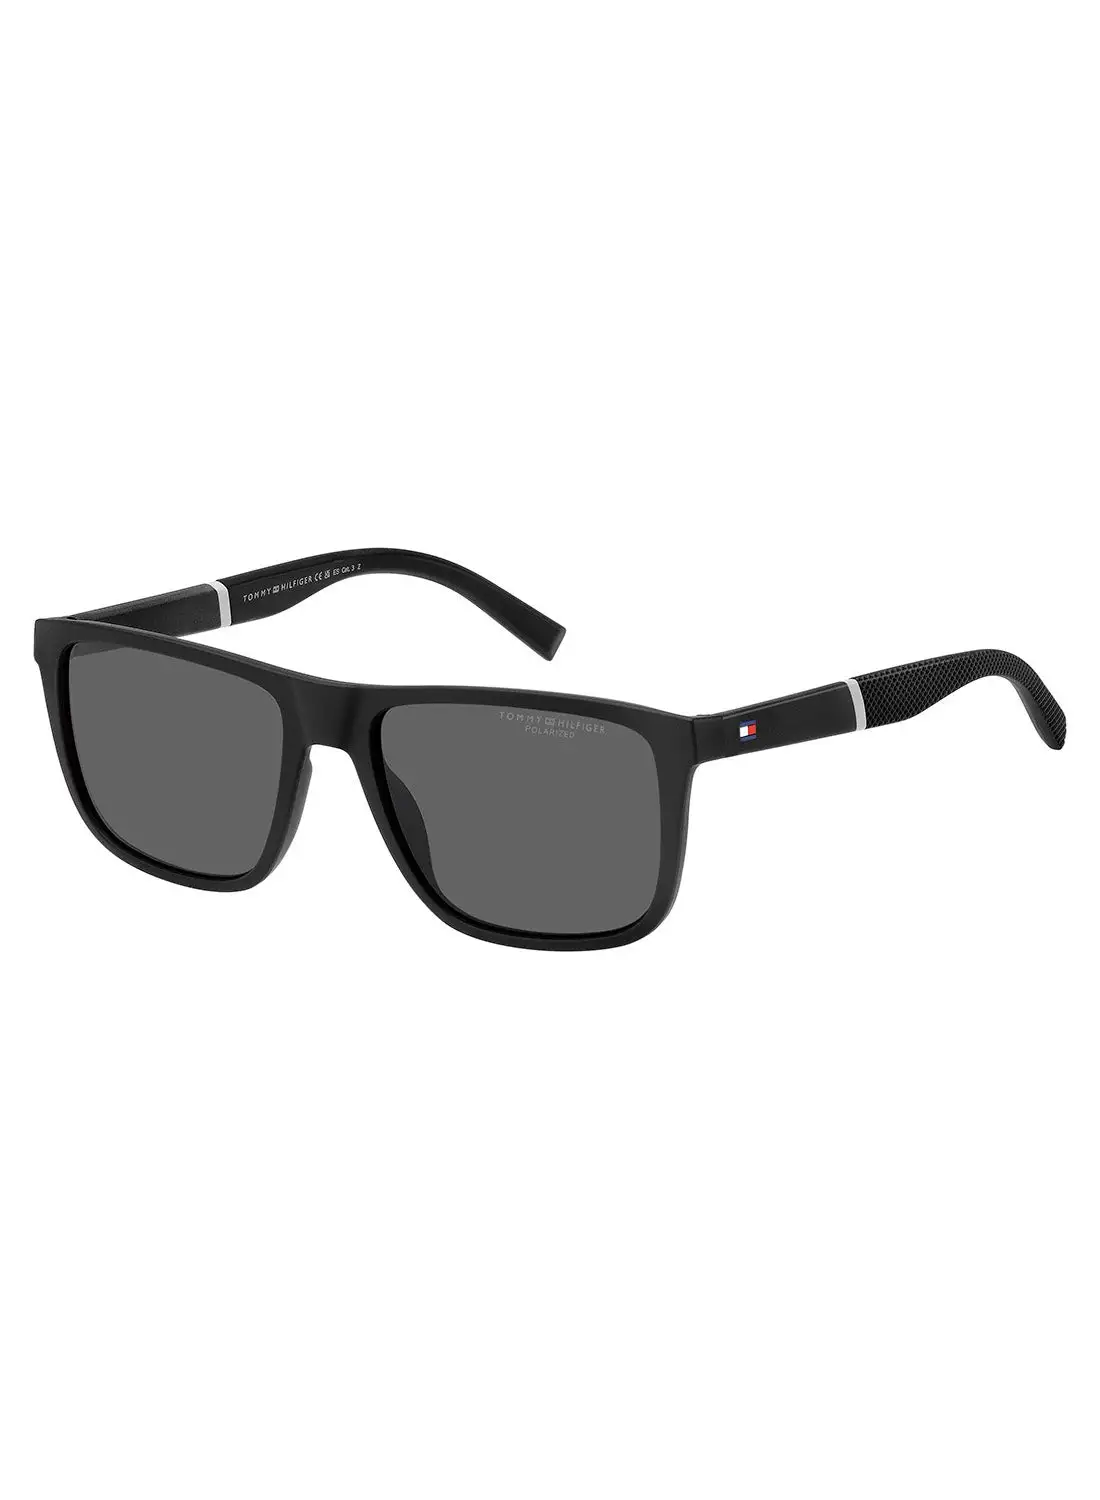 TOMMY HILFIGER Men's Polarized Rectangular Sunglasses - Th 2043/S Black Millimeter - Lens Size: 56 Mm